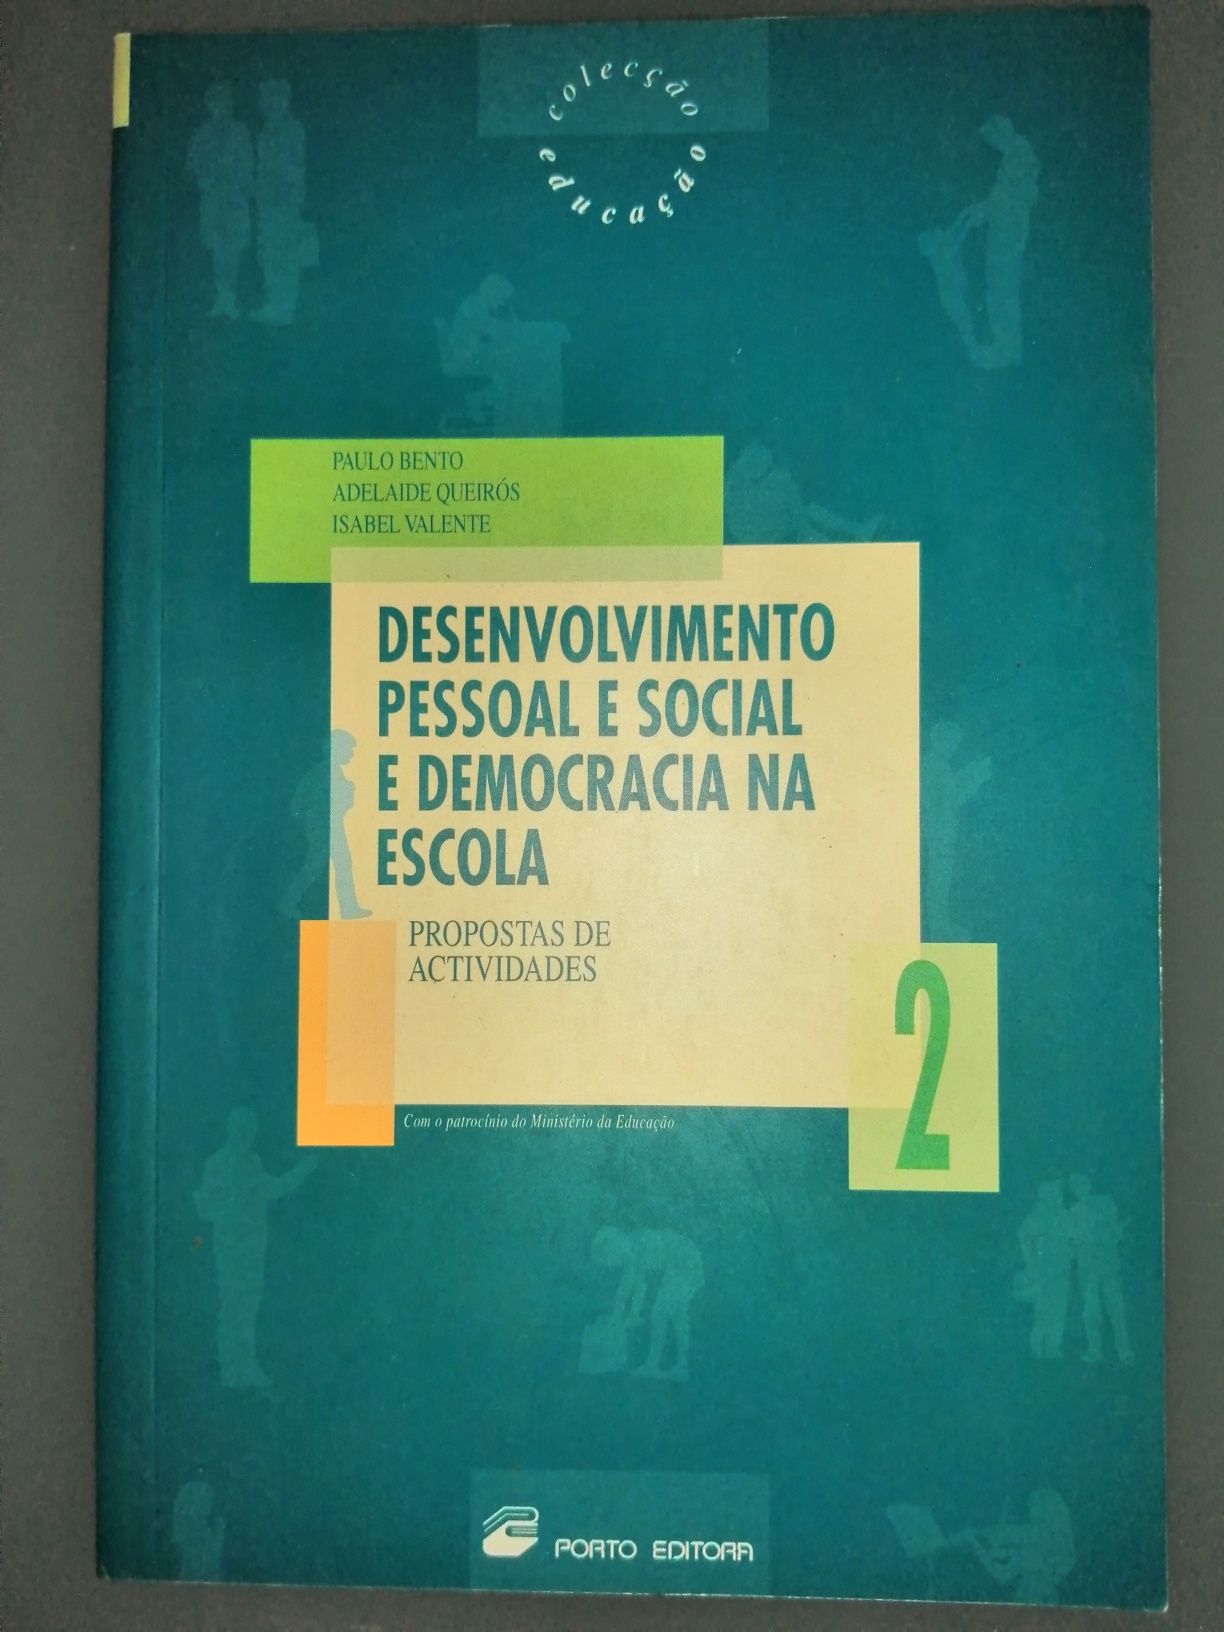 Desenvolvimento pessoal e social e democracia na escola  propostas de*